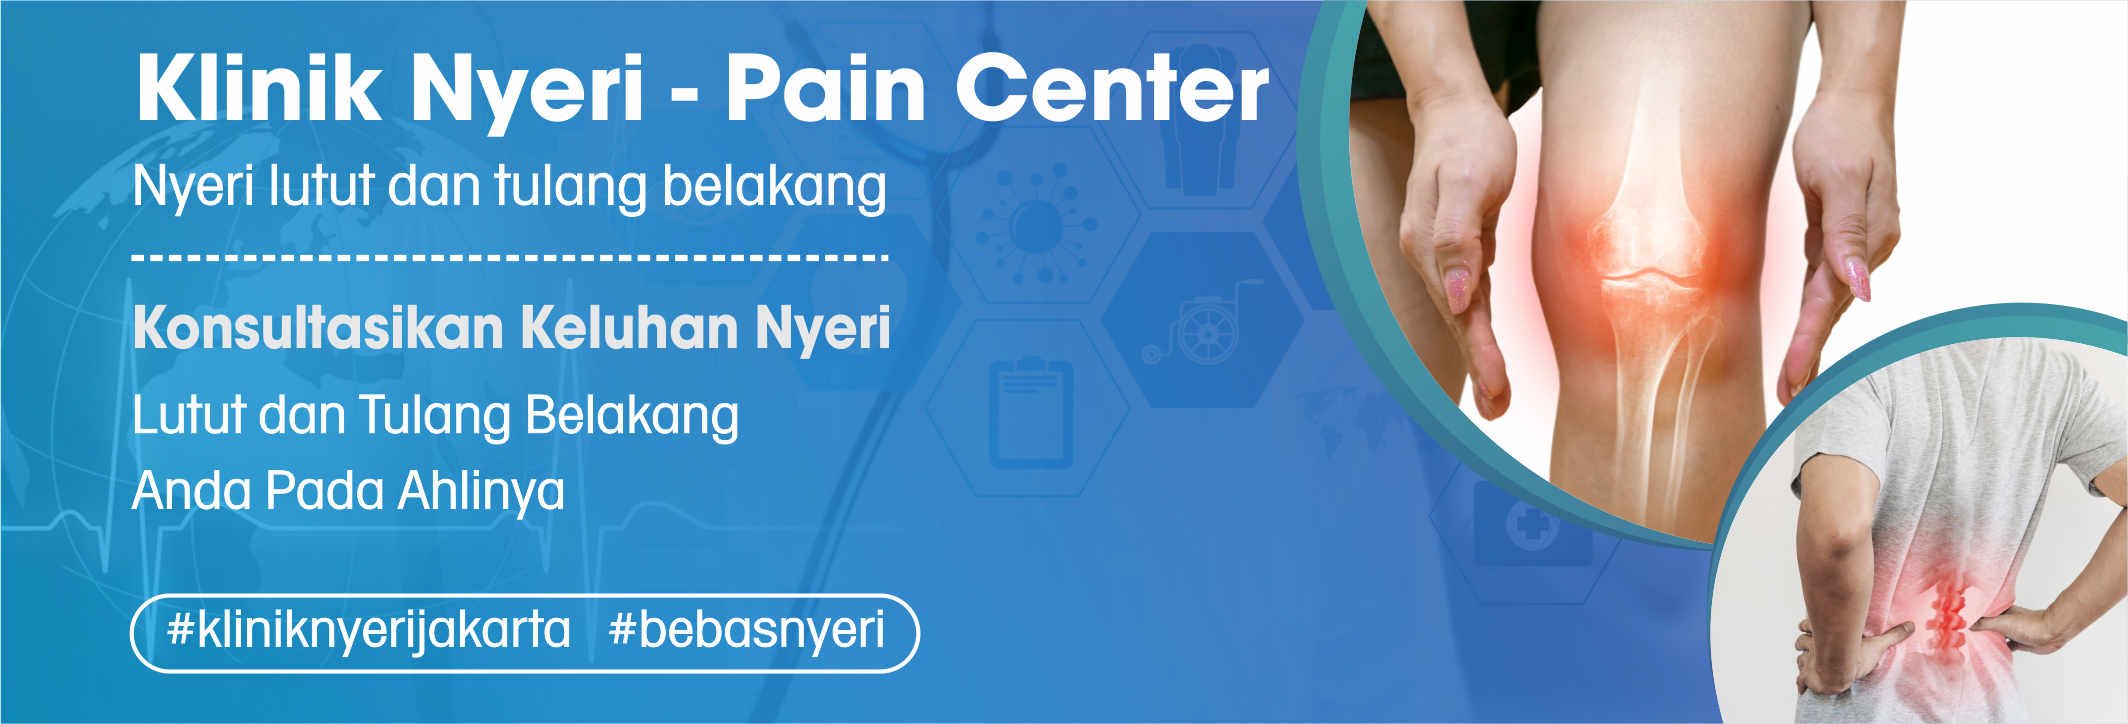 pain center Head Banner KL klinik